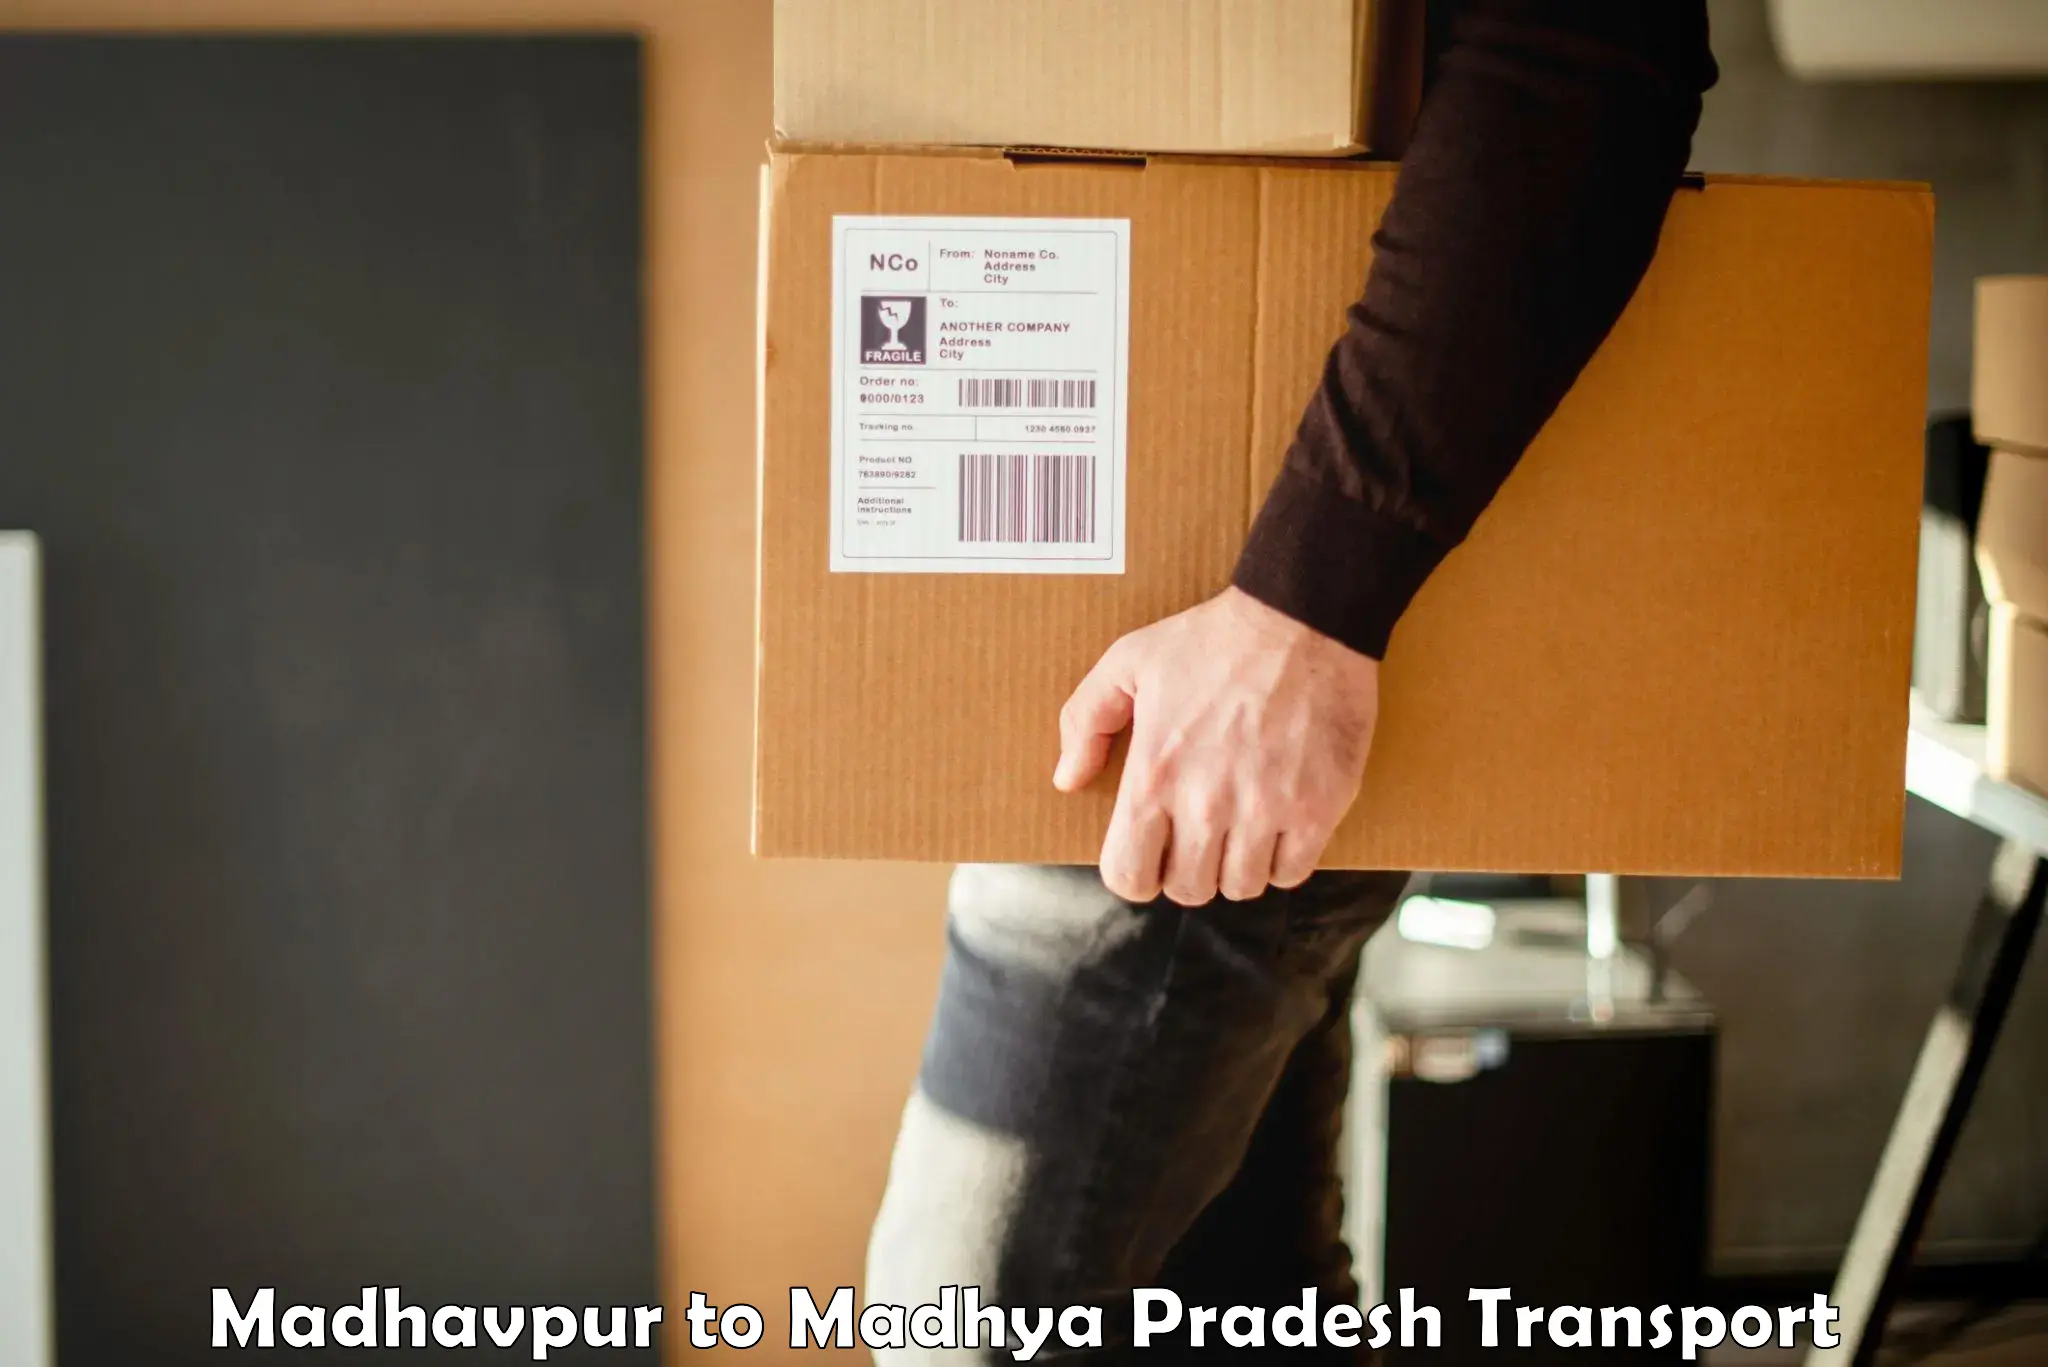 Sending bike to another city Madhavpur to Chand Chaurai